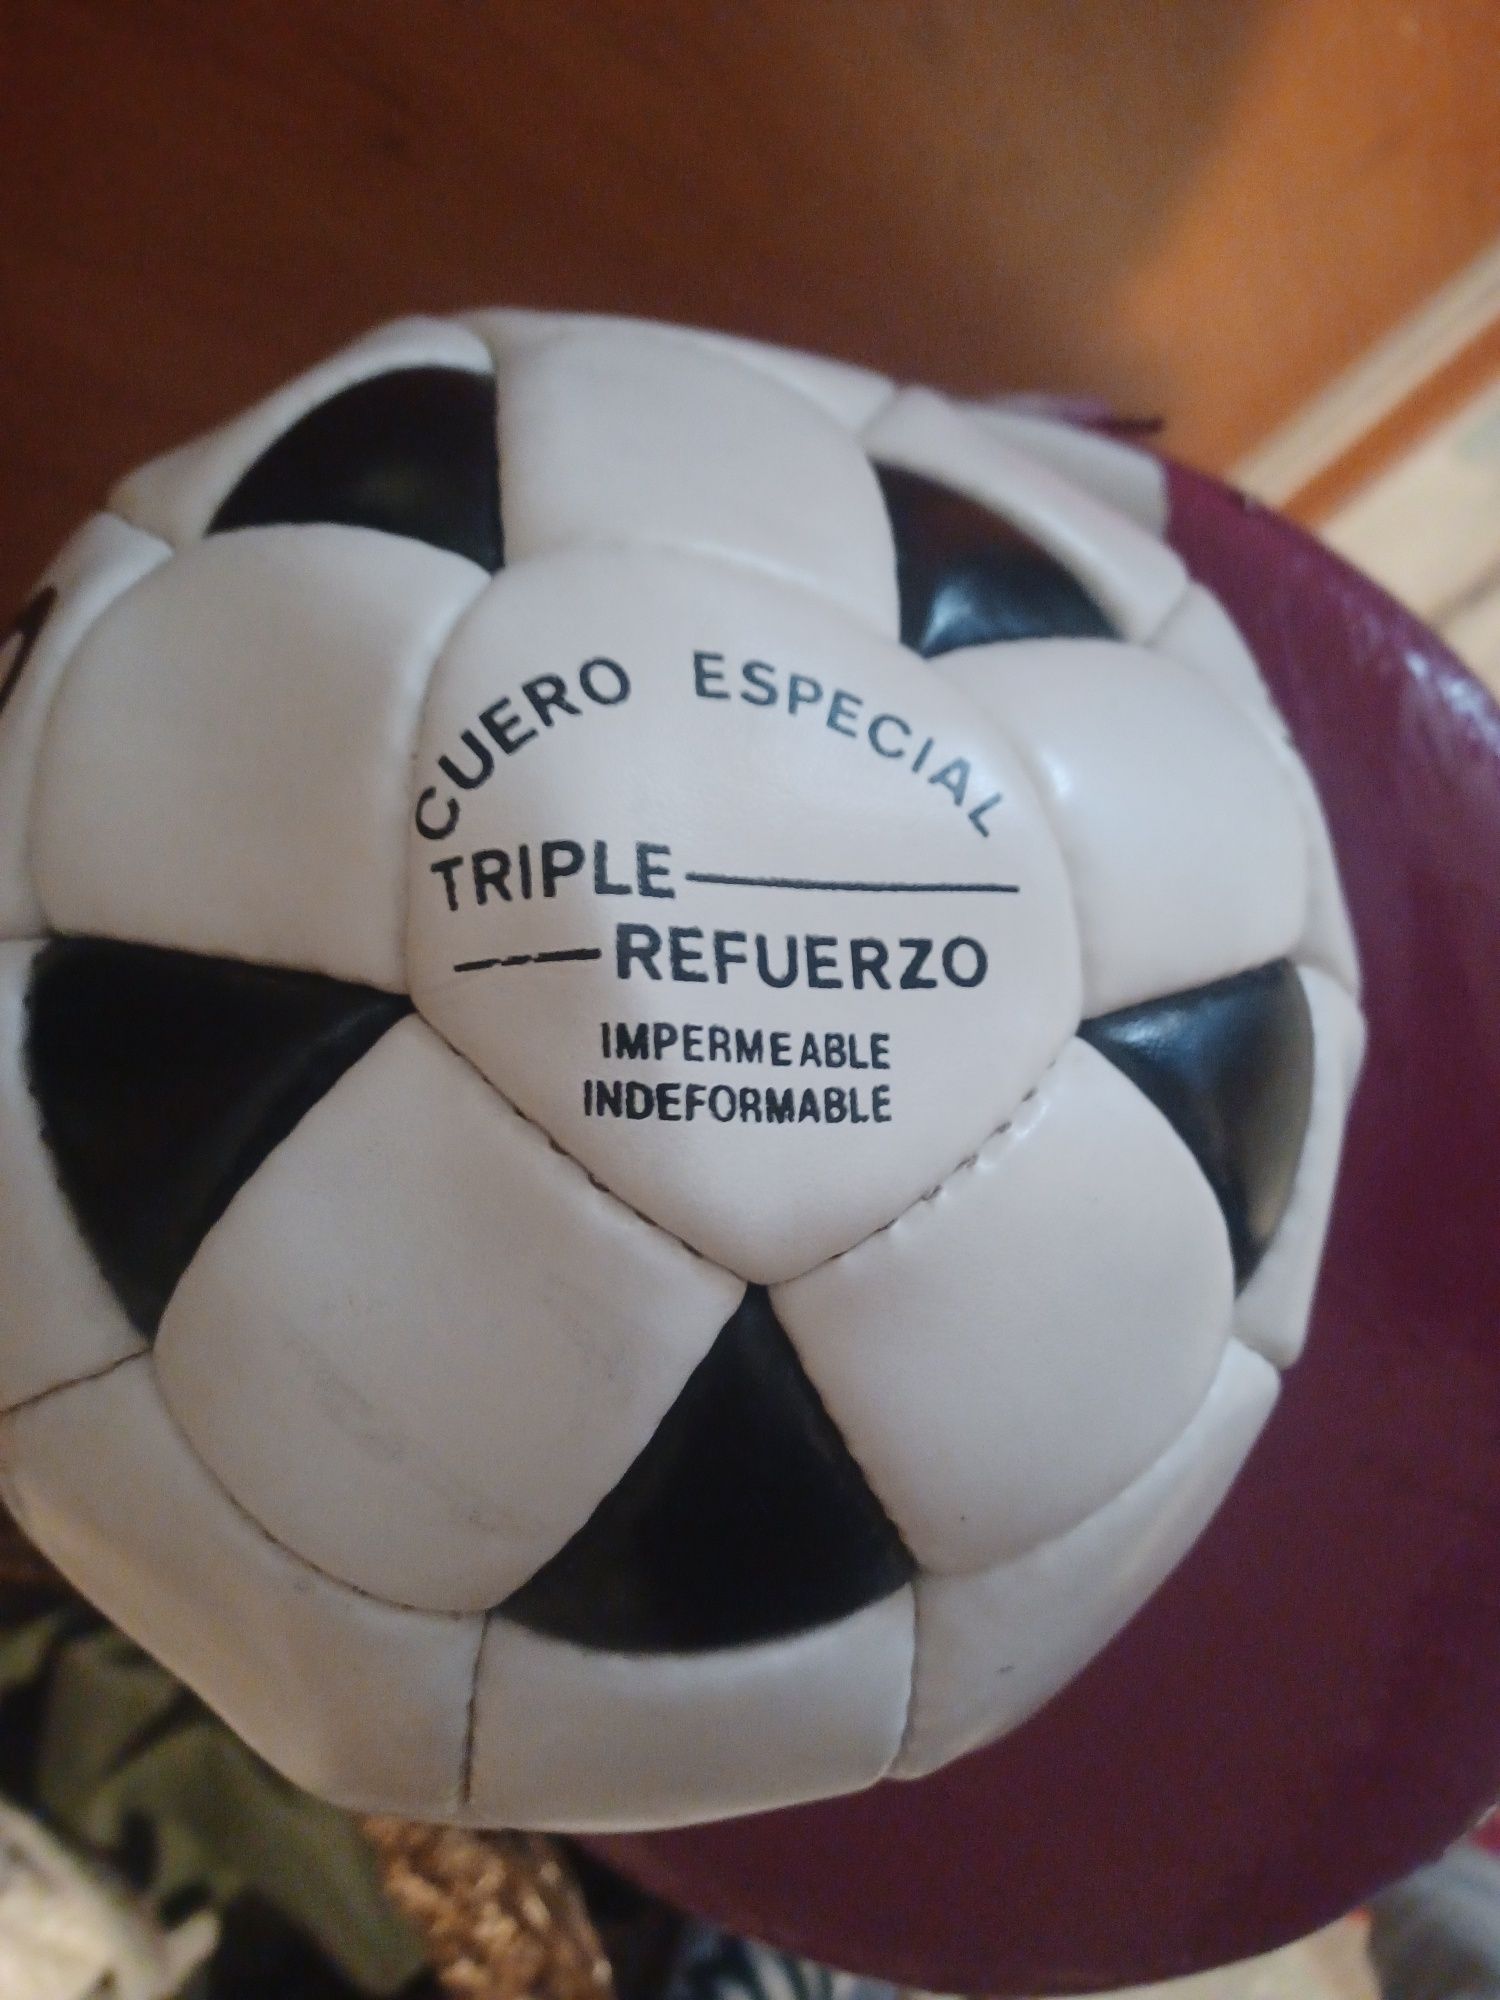 Liga española balon oficia колекционерска футболна топка